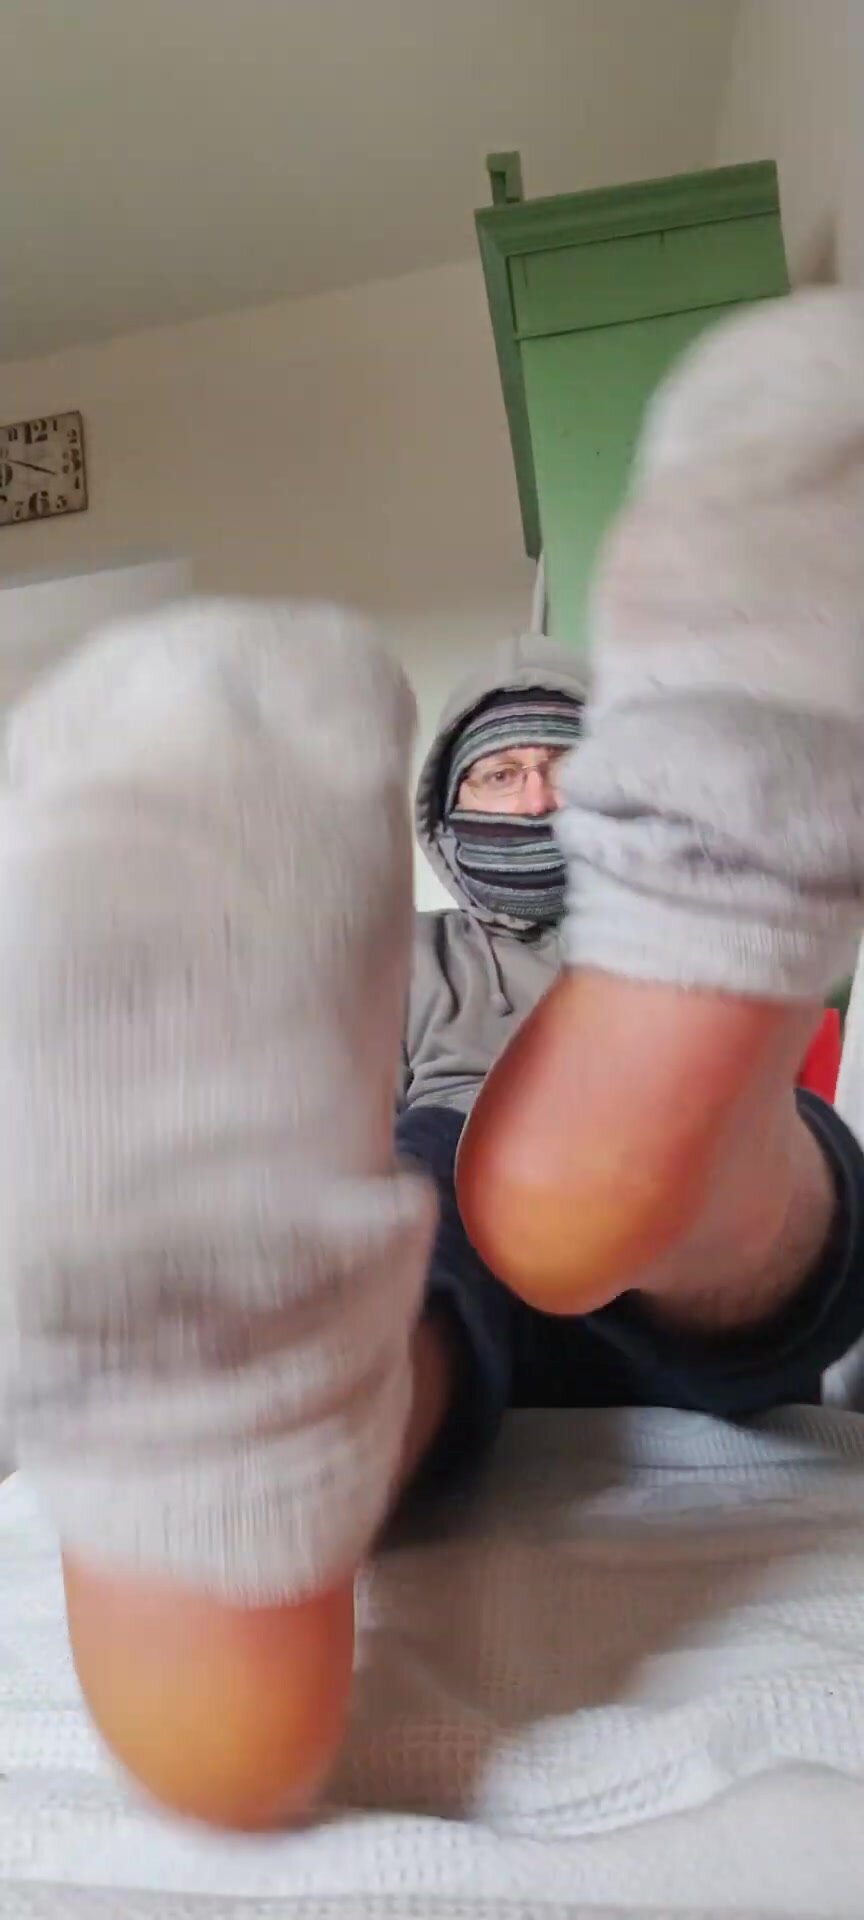 Guy Smells His Sweaty Socks and Feet